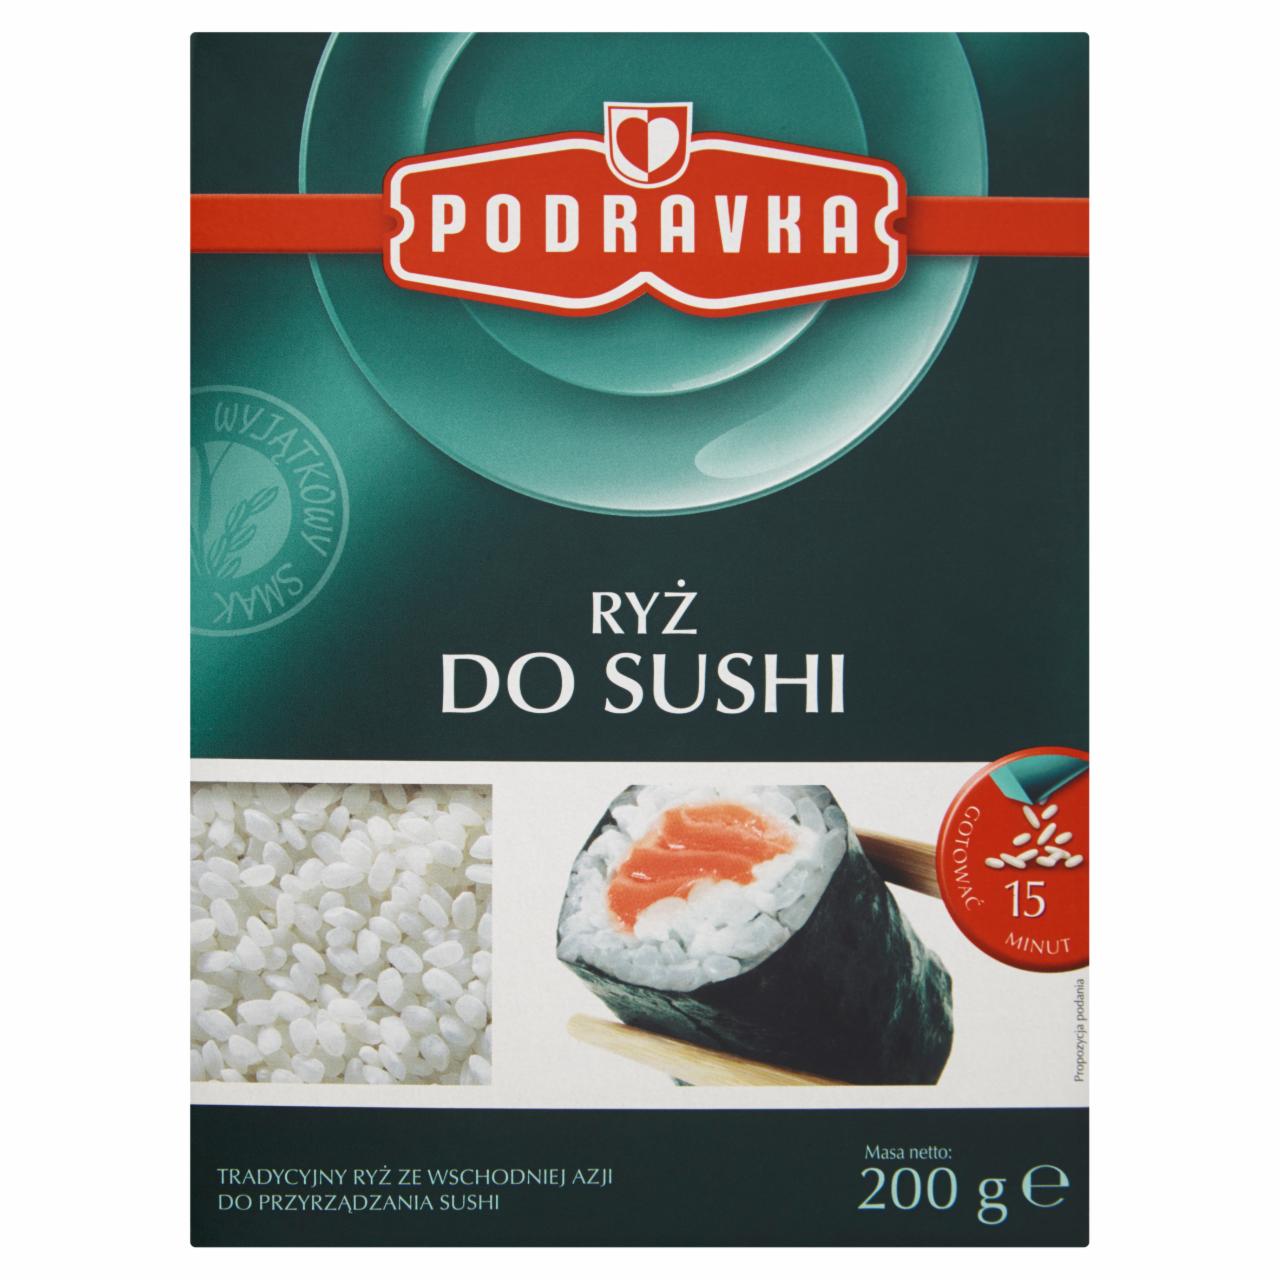 Zdjęcia - Podravka Ryż do sushi 200 g